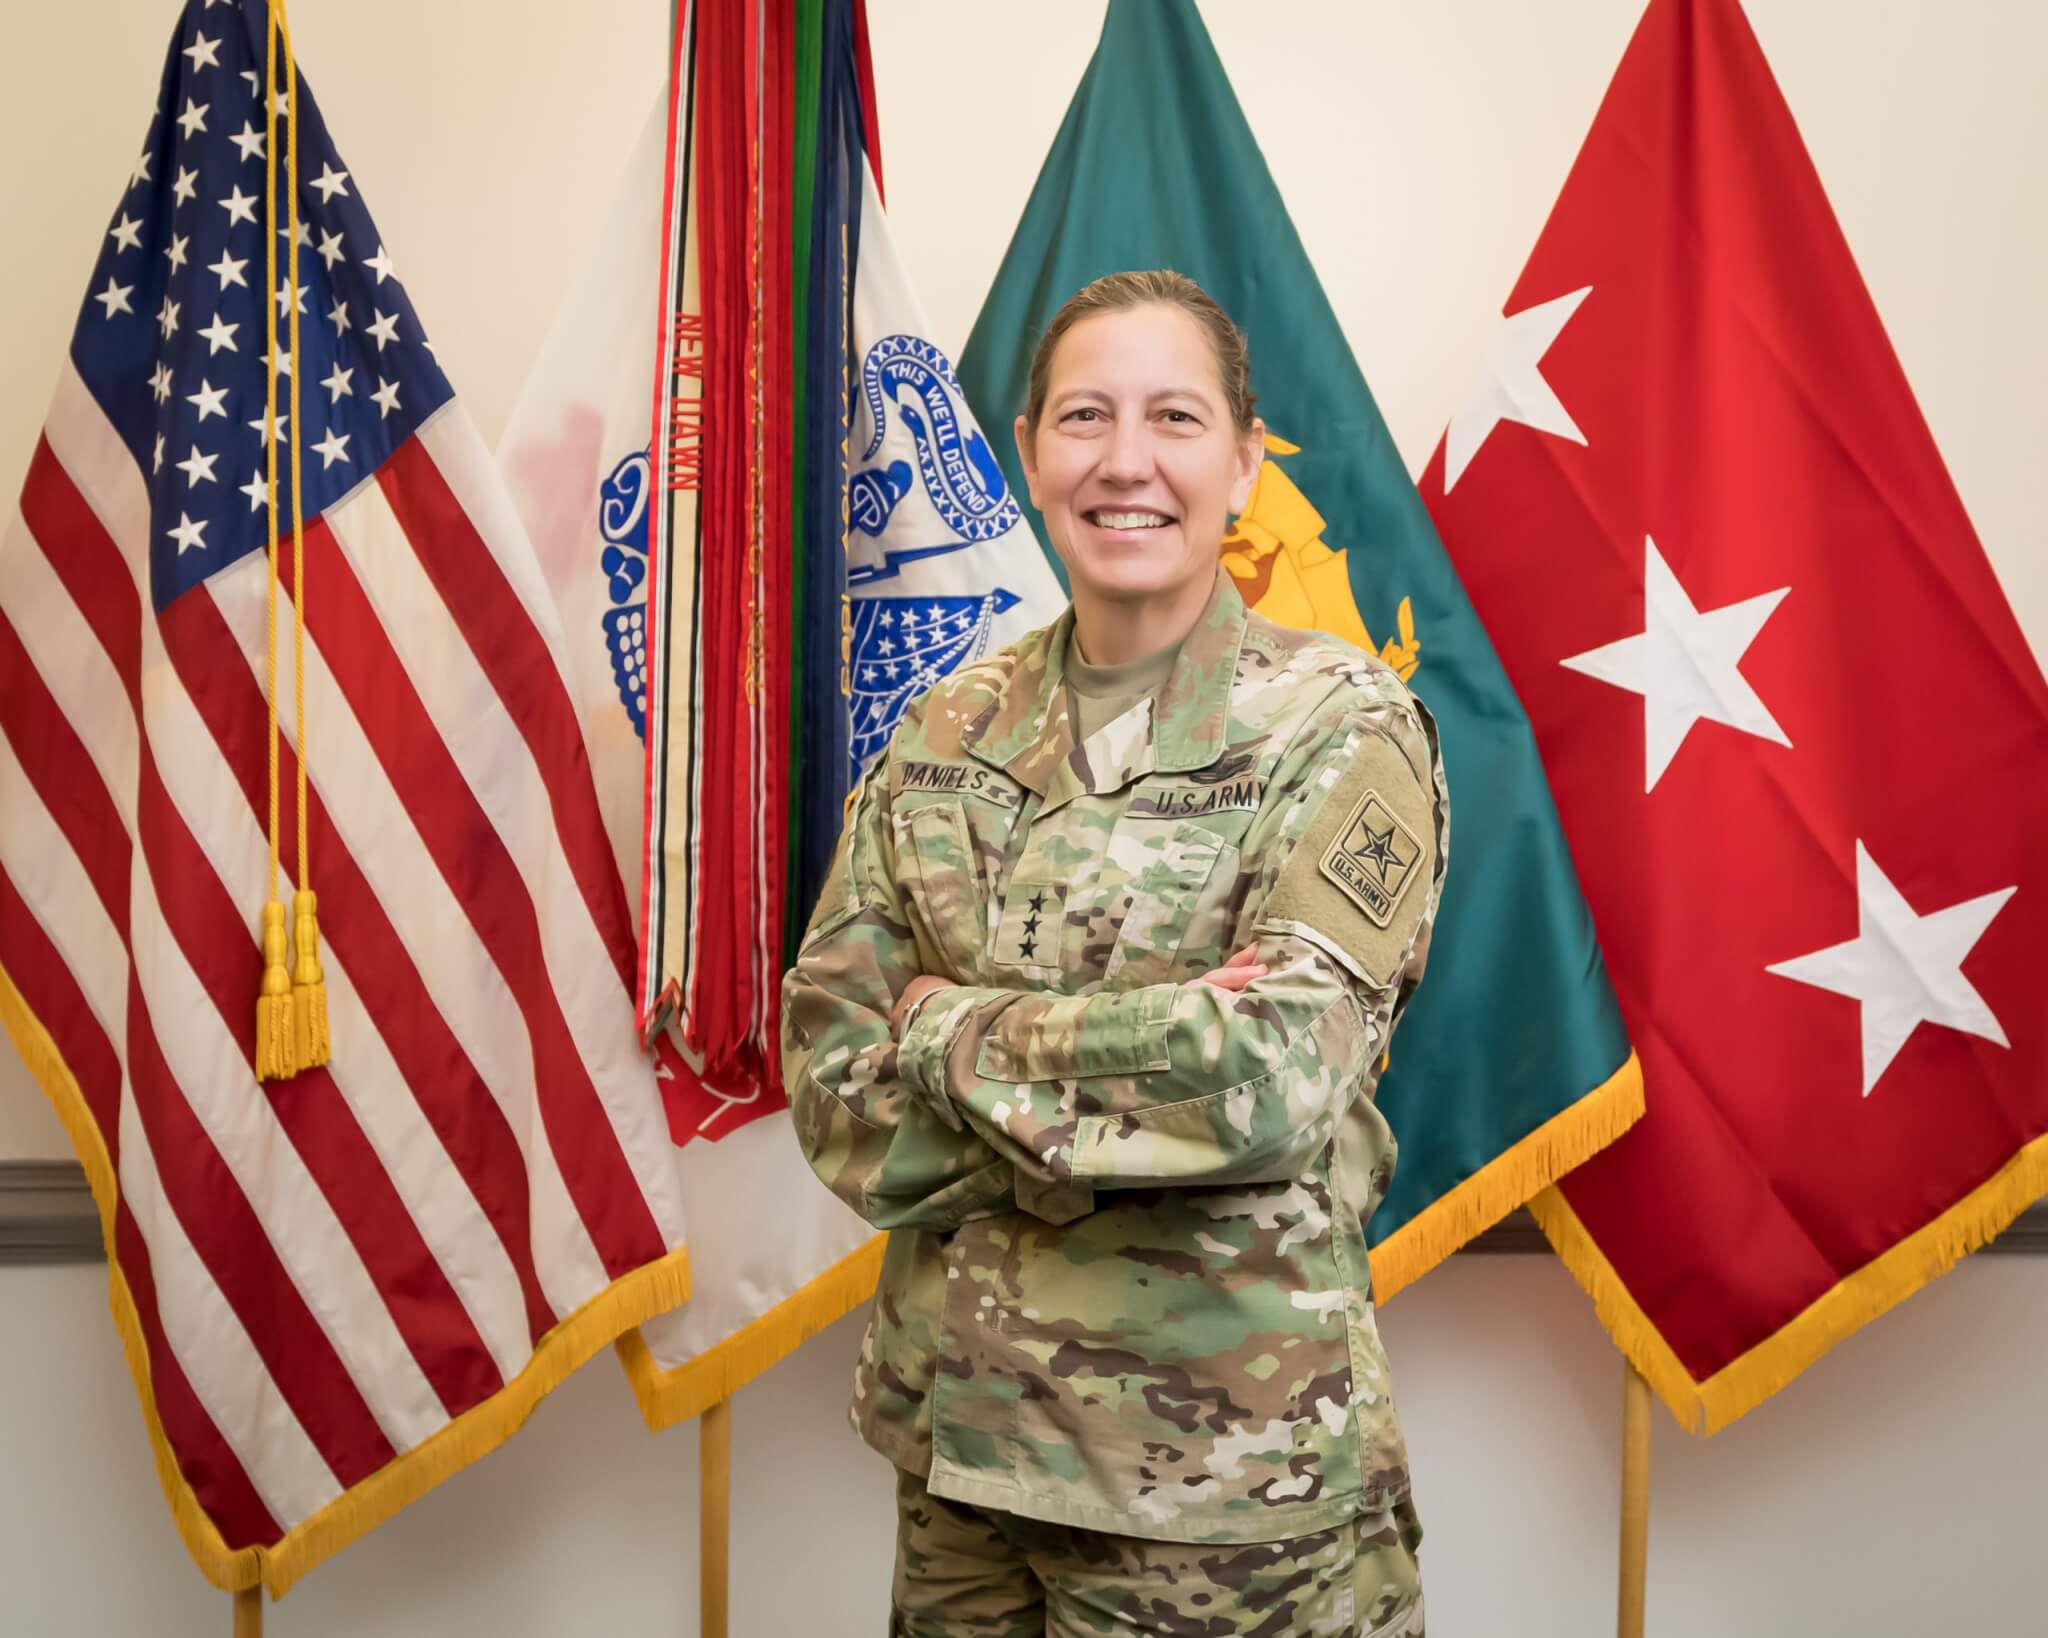 Lt. Gen. Jody Daniels, Chief of Army Reserve. Photos by Trish Alegre-Smith.